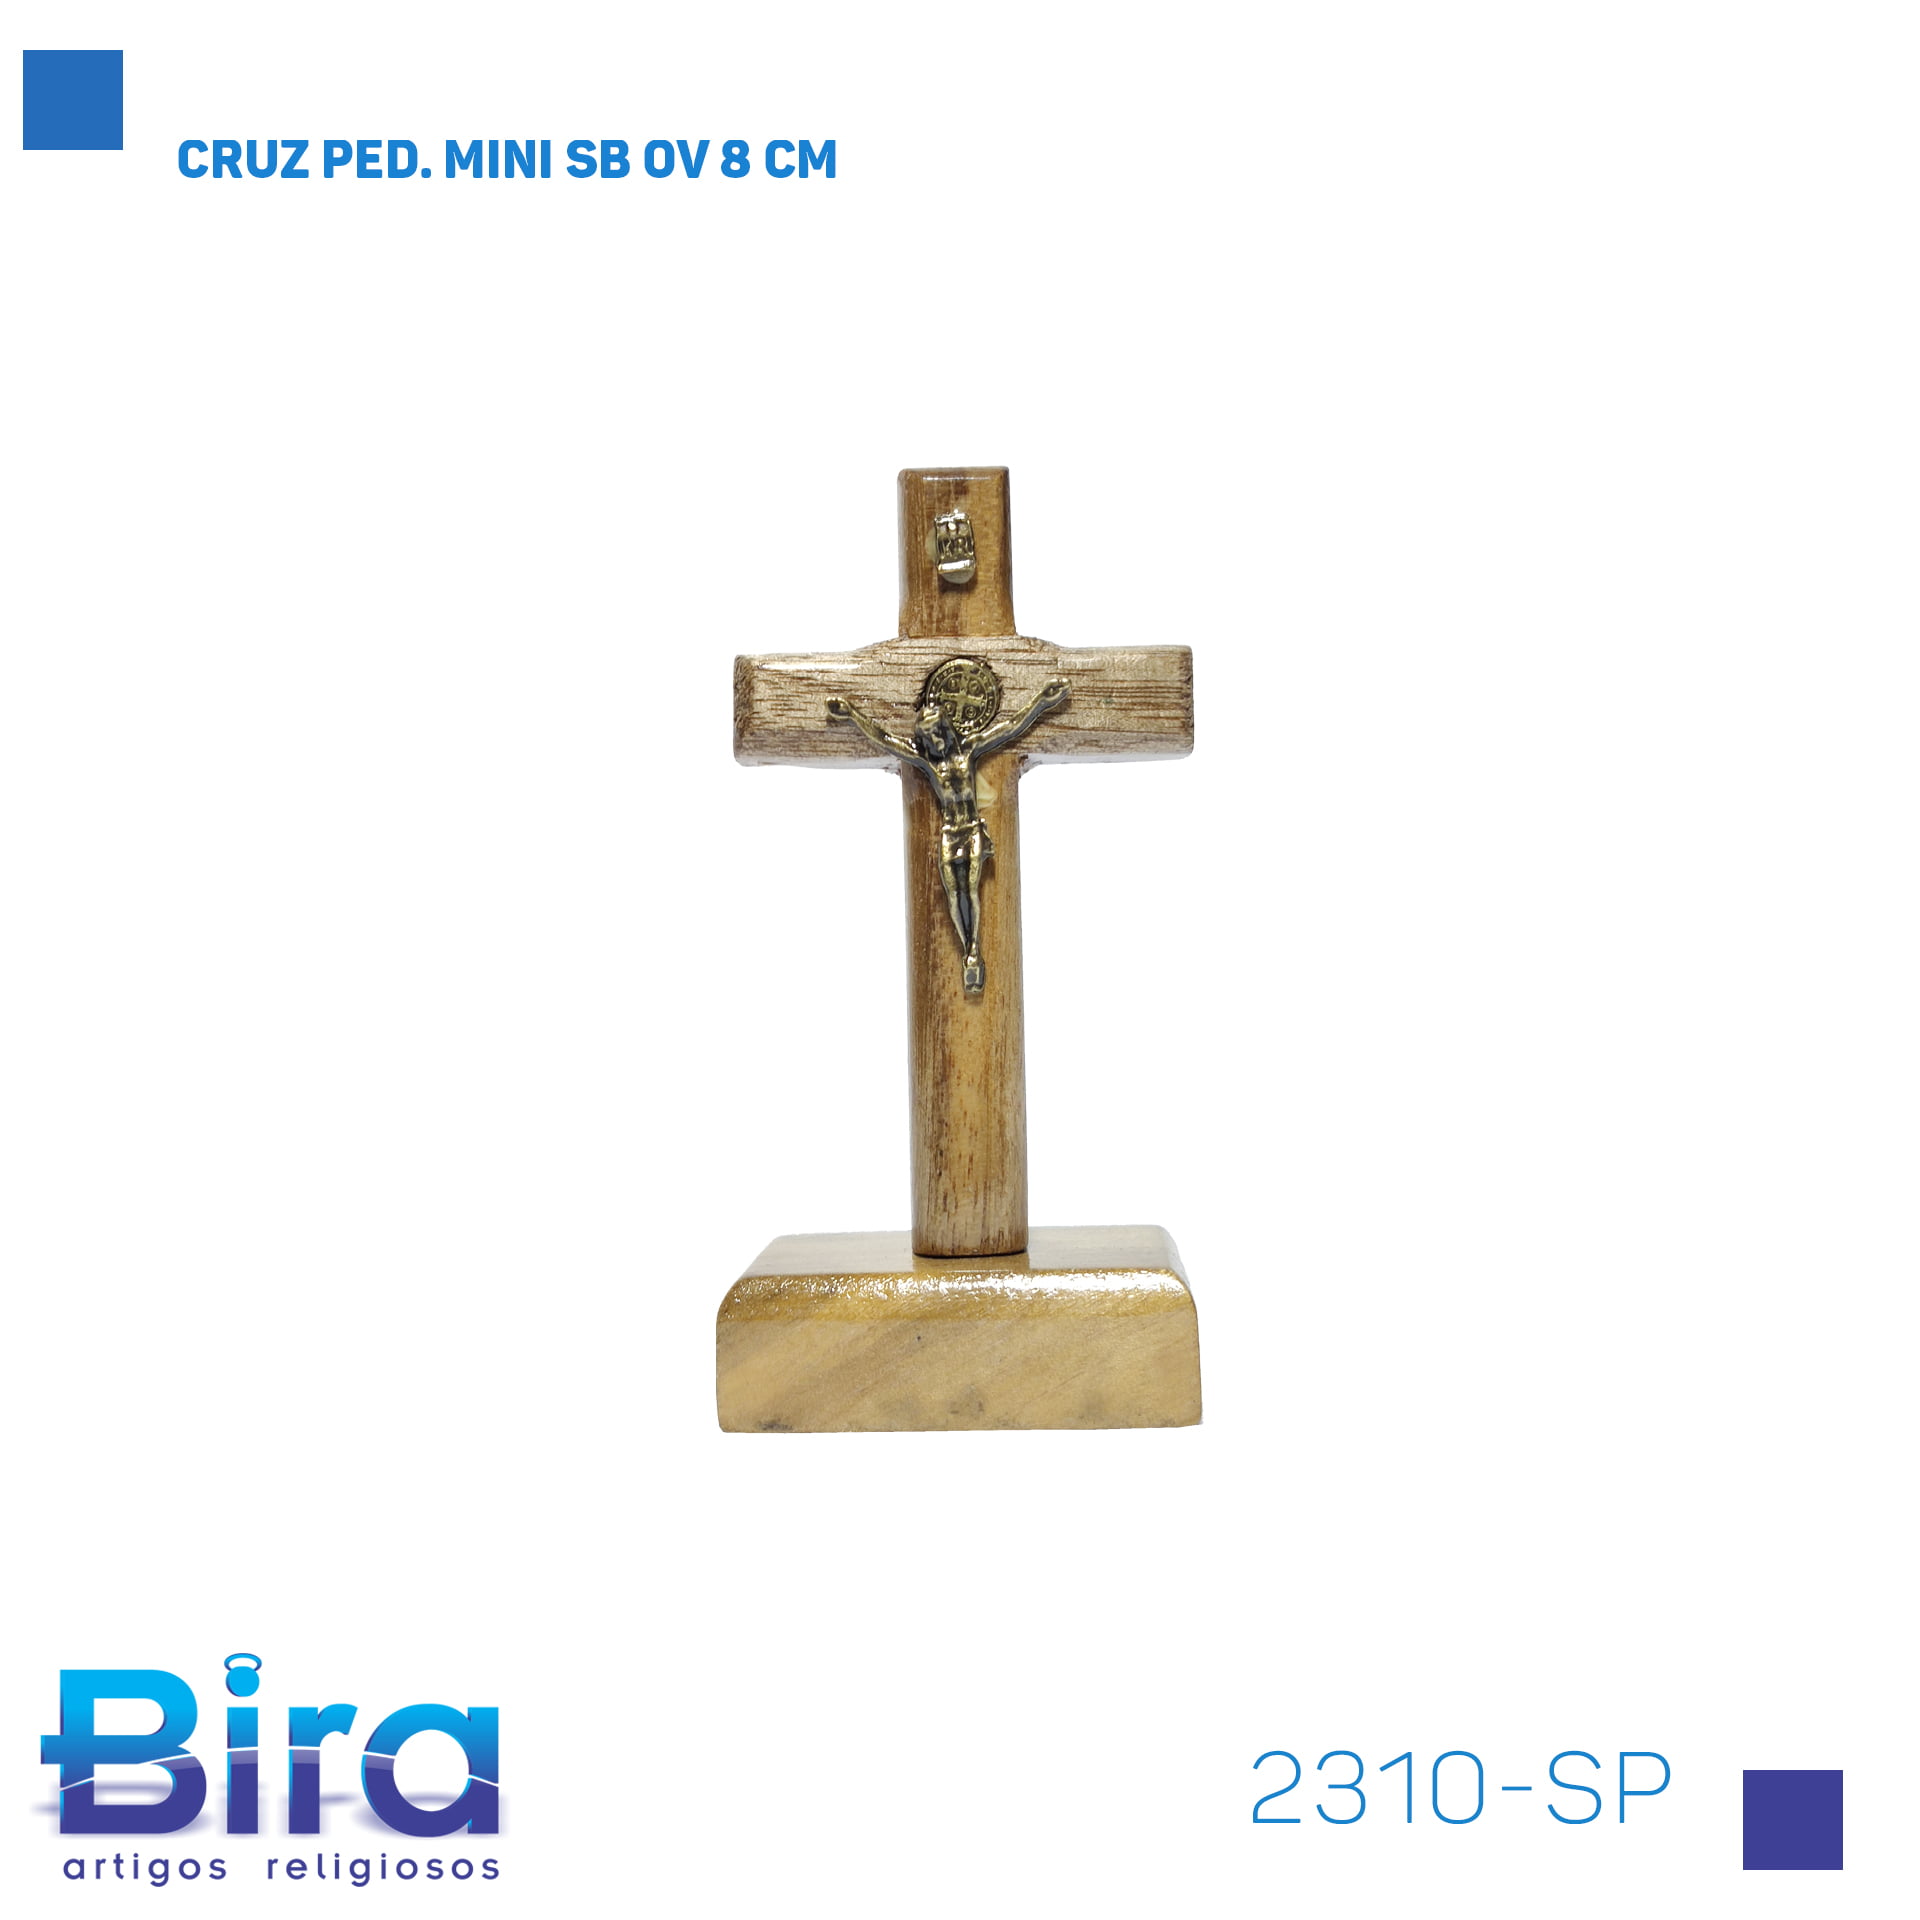 Bira Artigos Religiosos - CRUZ PED. MINI SB OV 8 CM Cód. 2310-SP